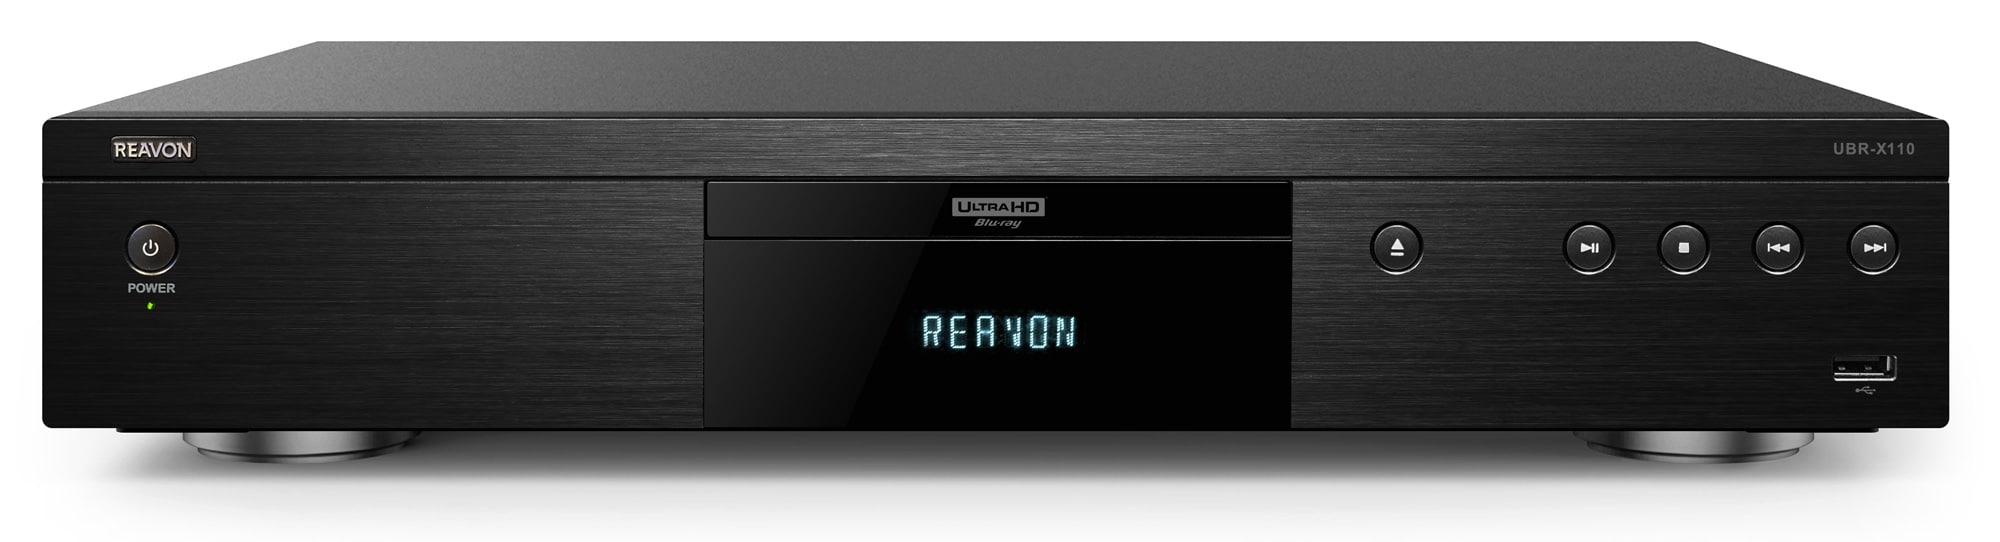 REAVON UBR-X110 - DOLBY VISION 4K ULTRA HD BLU-RAY SACD PLAYER